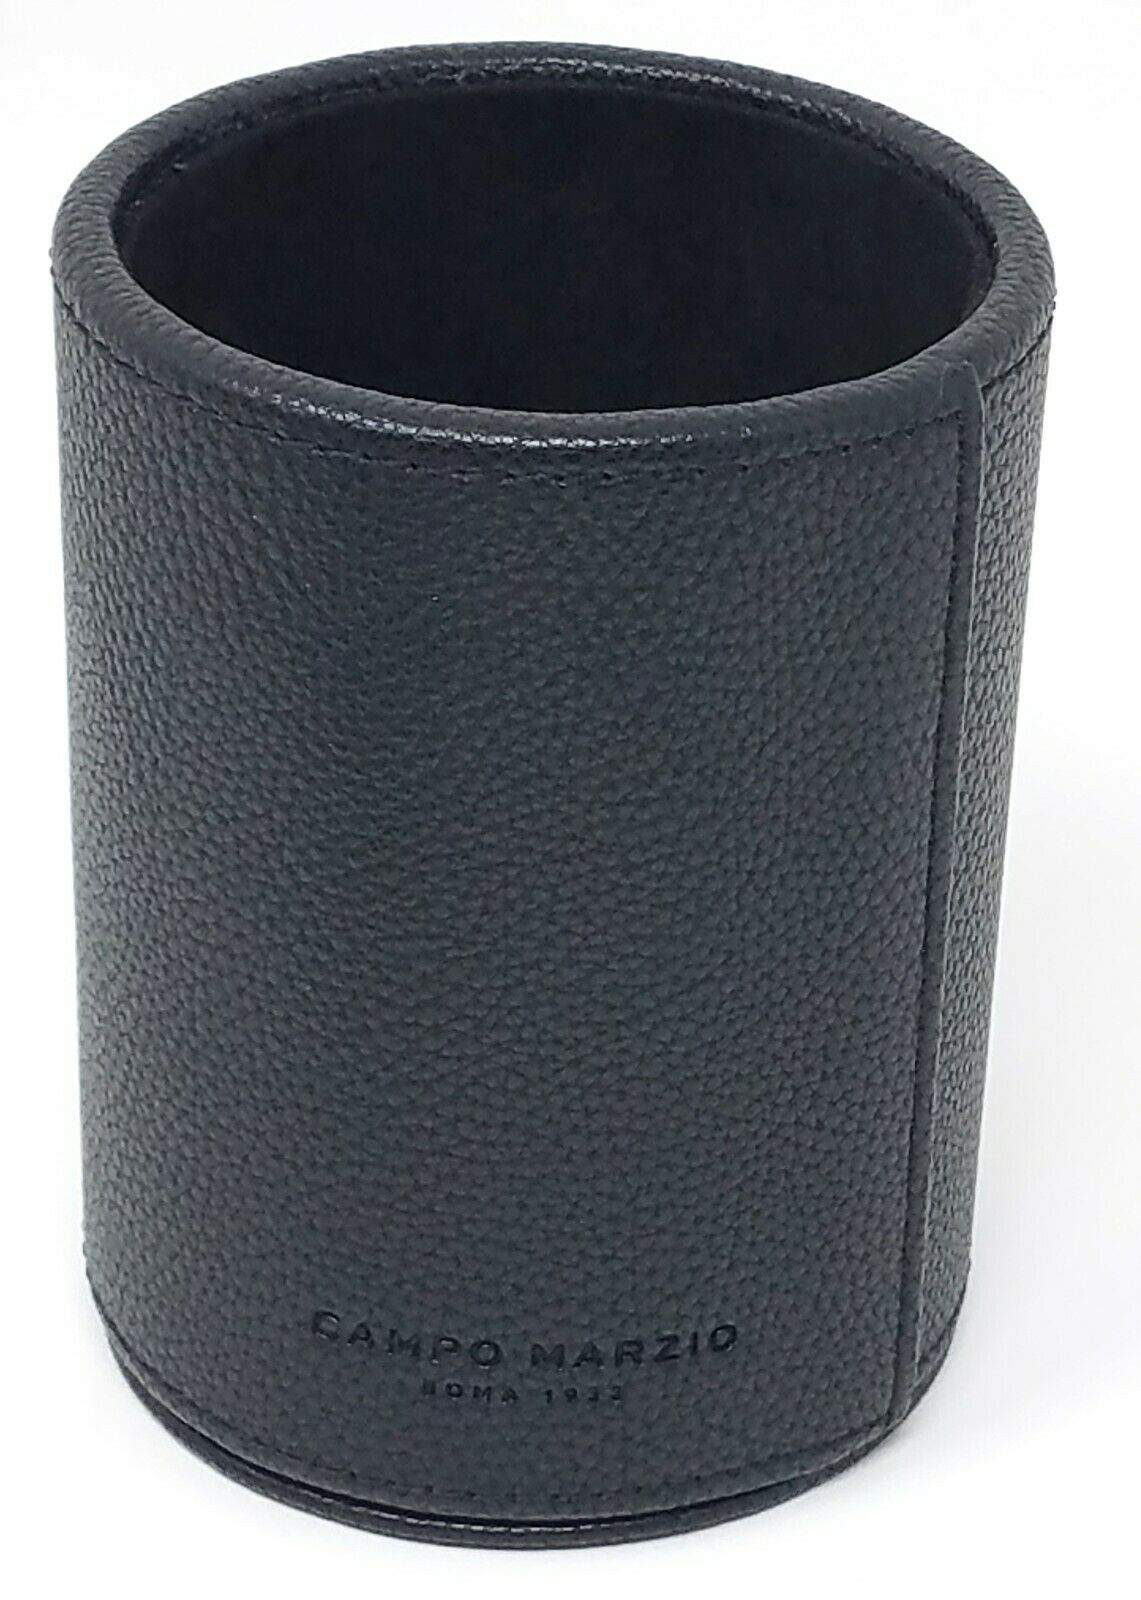 New! Campo Marzio Round Pen Holder, Nice Gift Idea, Leather - New In Retail Box